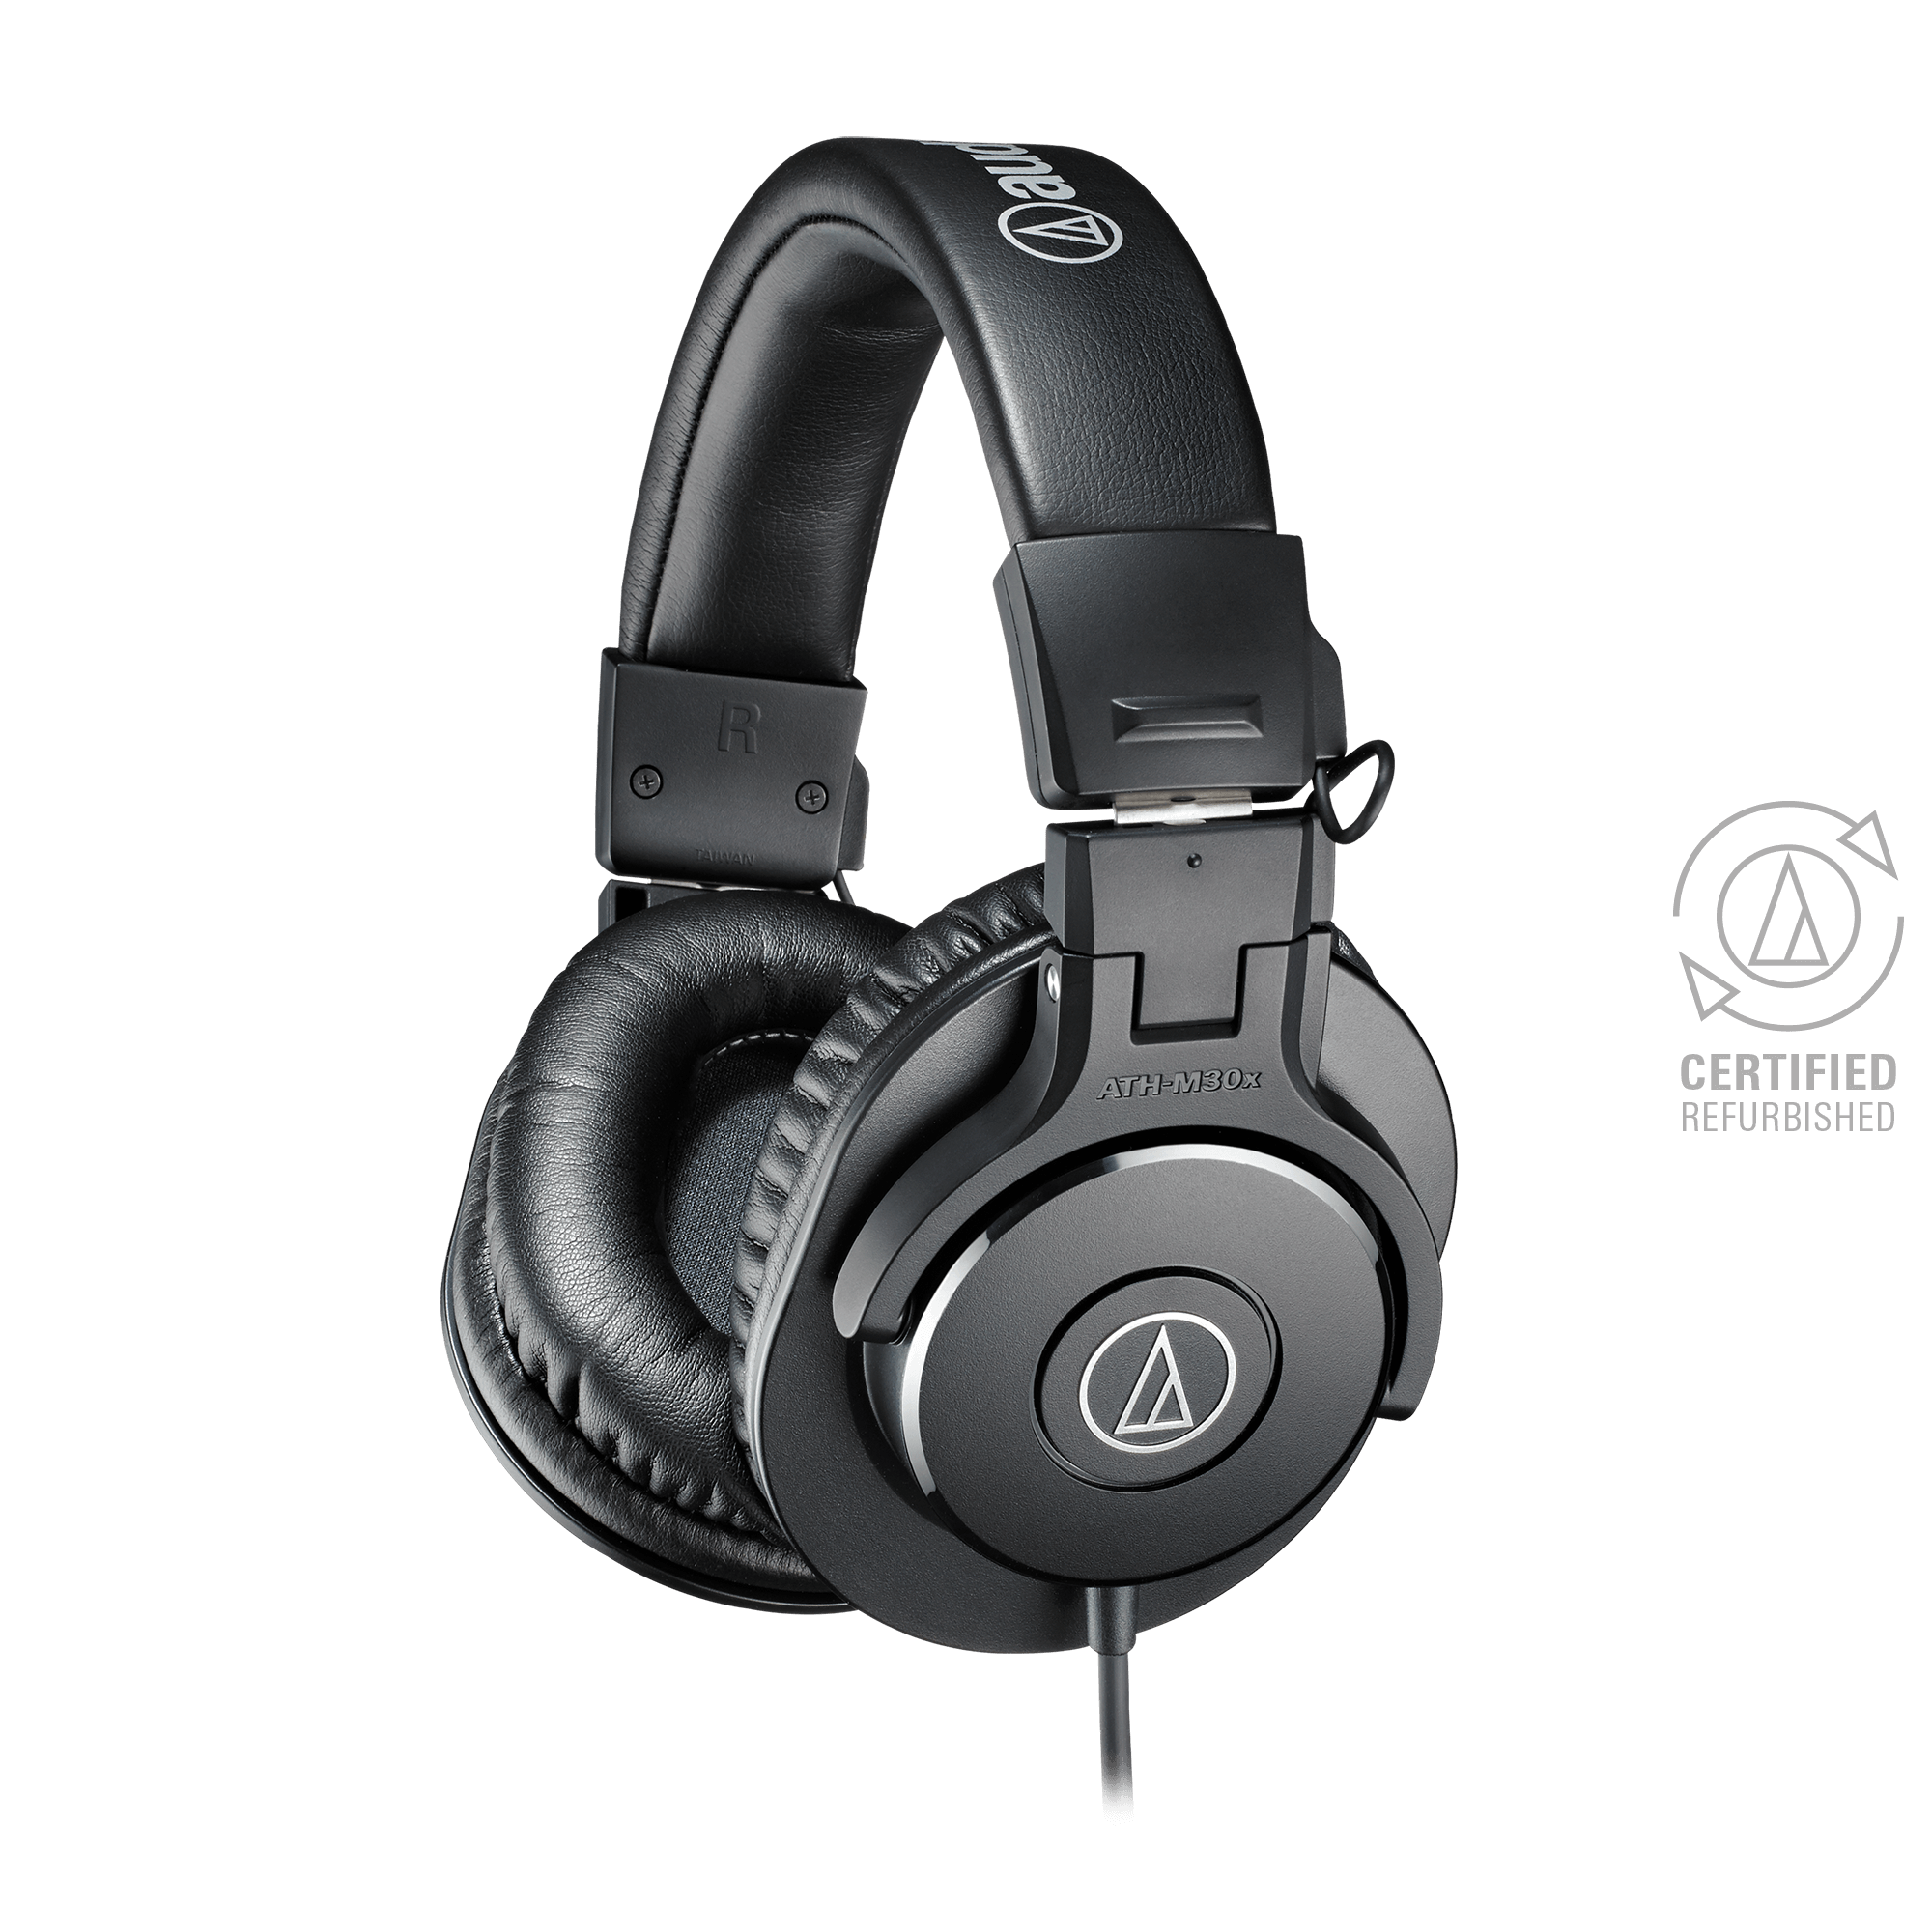 Professional Studio Monitor Headphones | ATH-M30x-CR | Certified